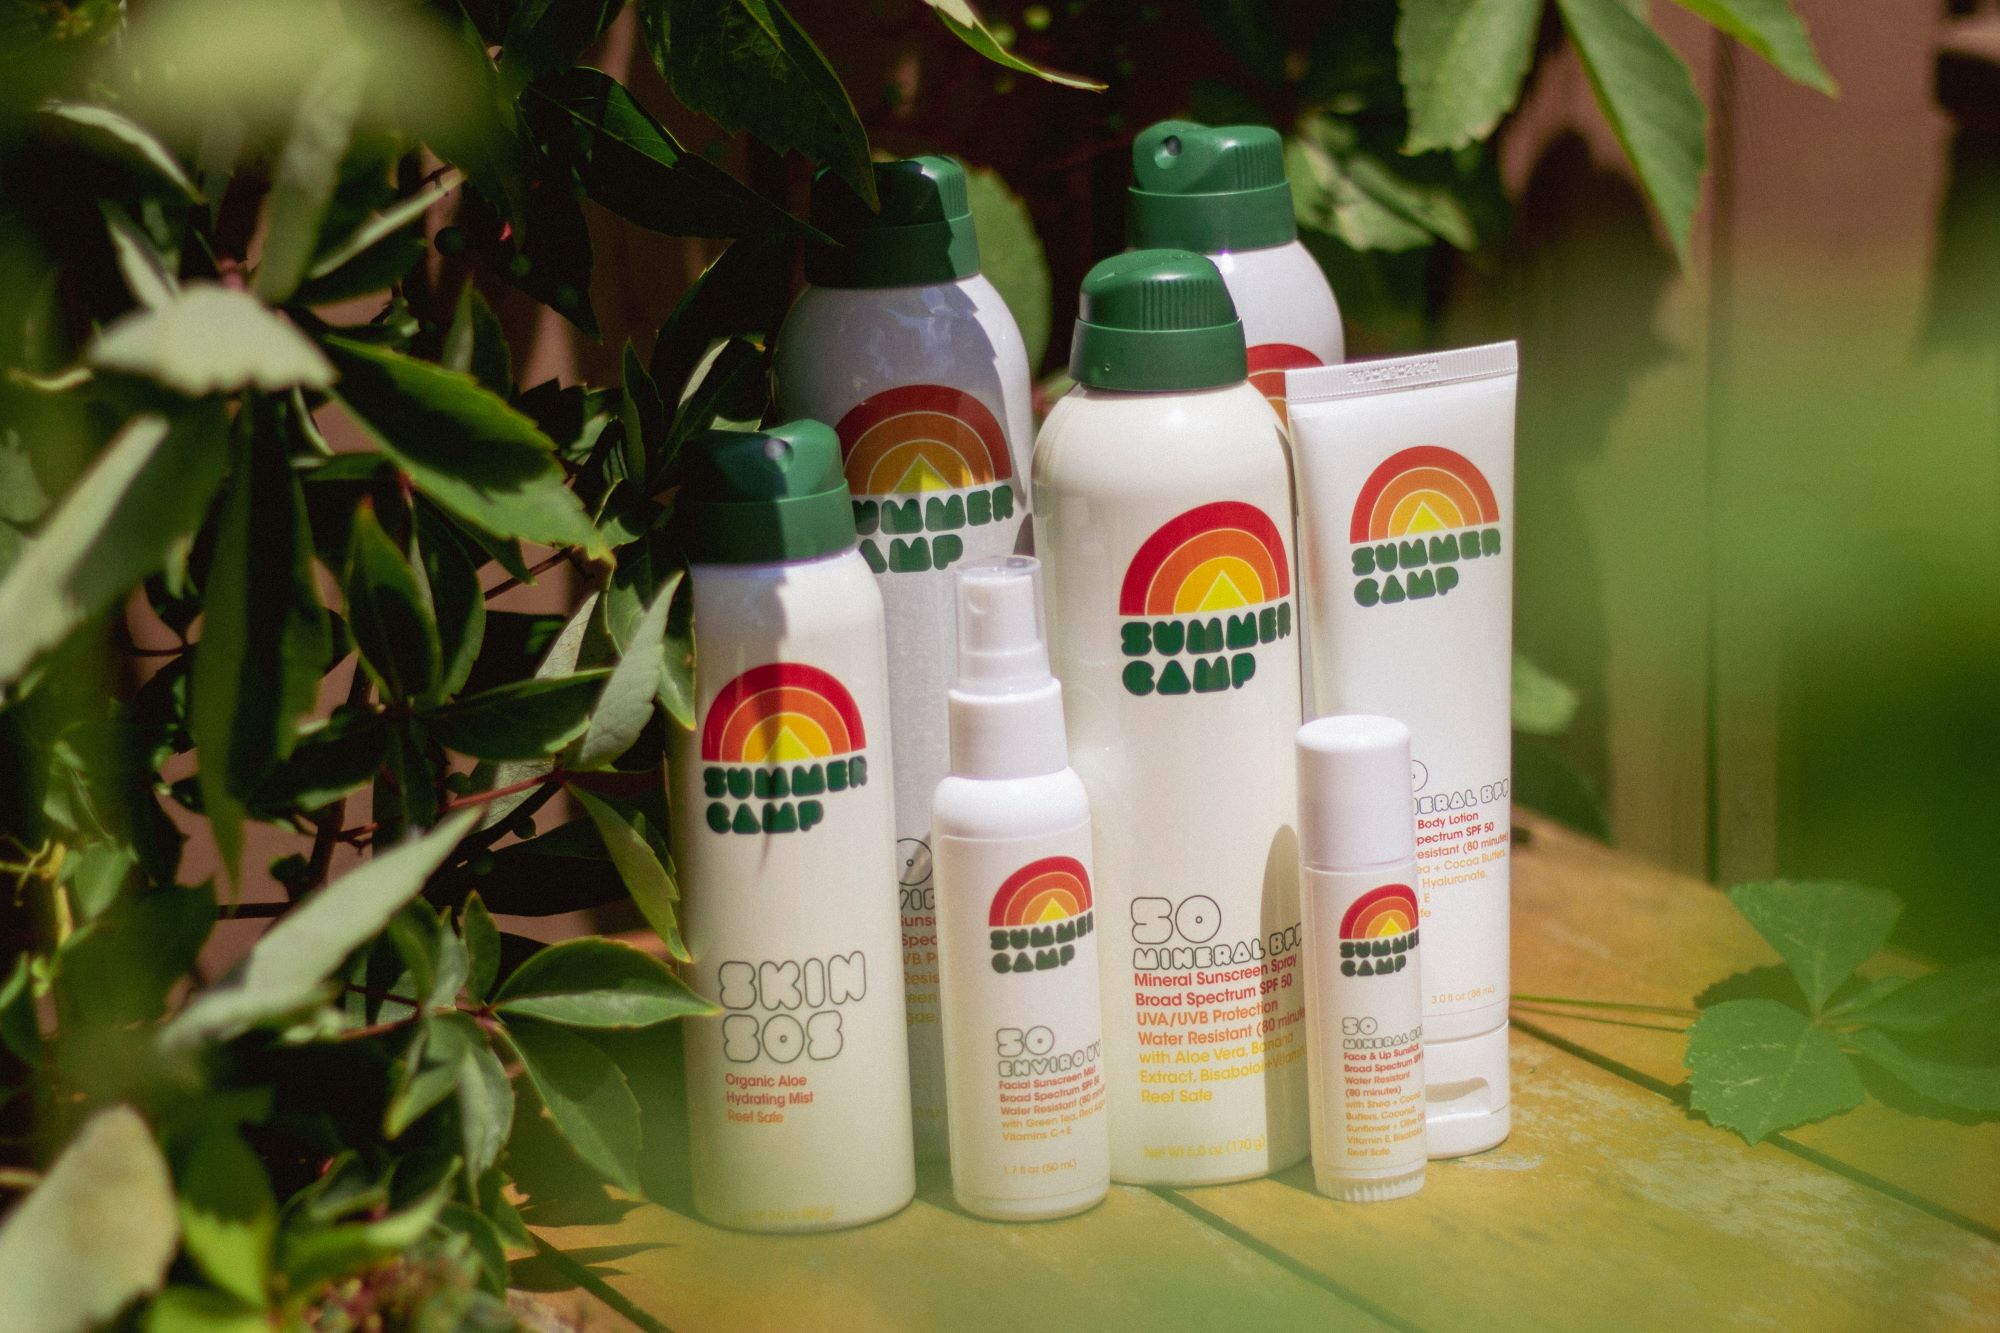 Summer Camp Enviro UV Water Resistant Sunscreen Mist for Face, SPF 50, 1.7 fl oz - image 5 of 5